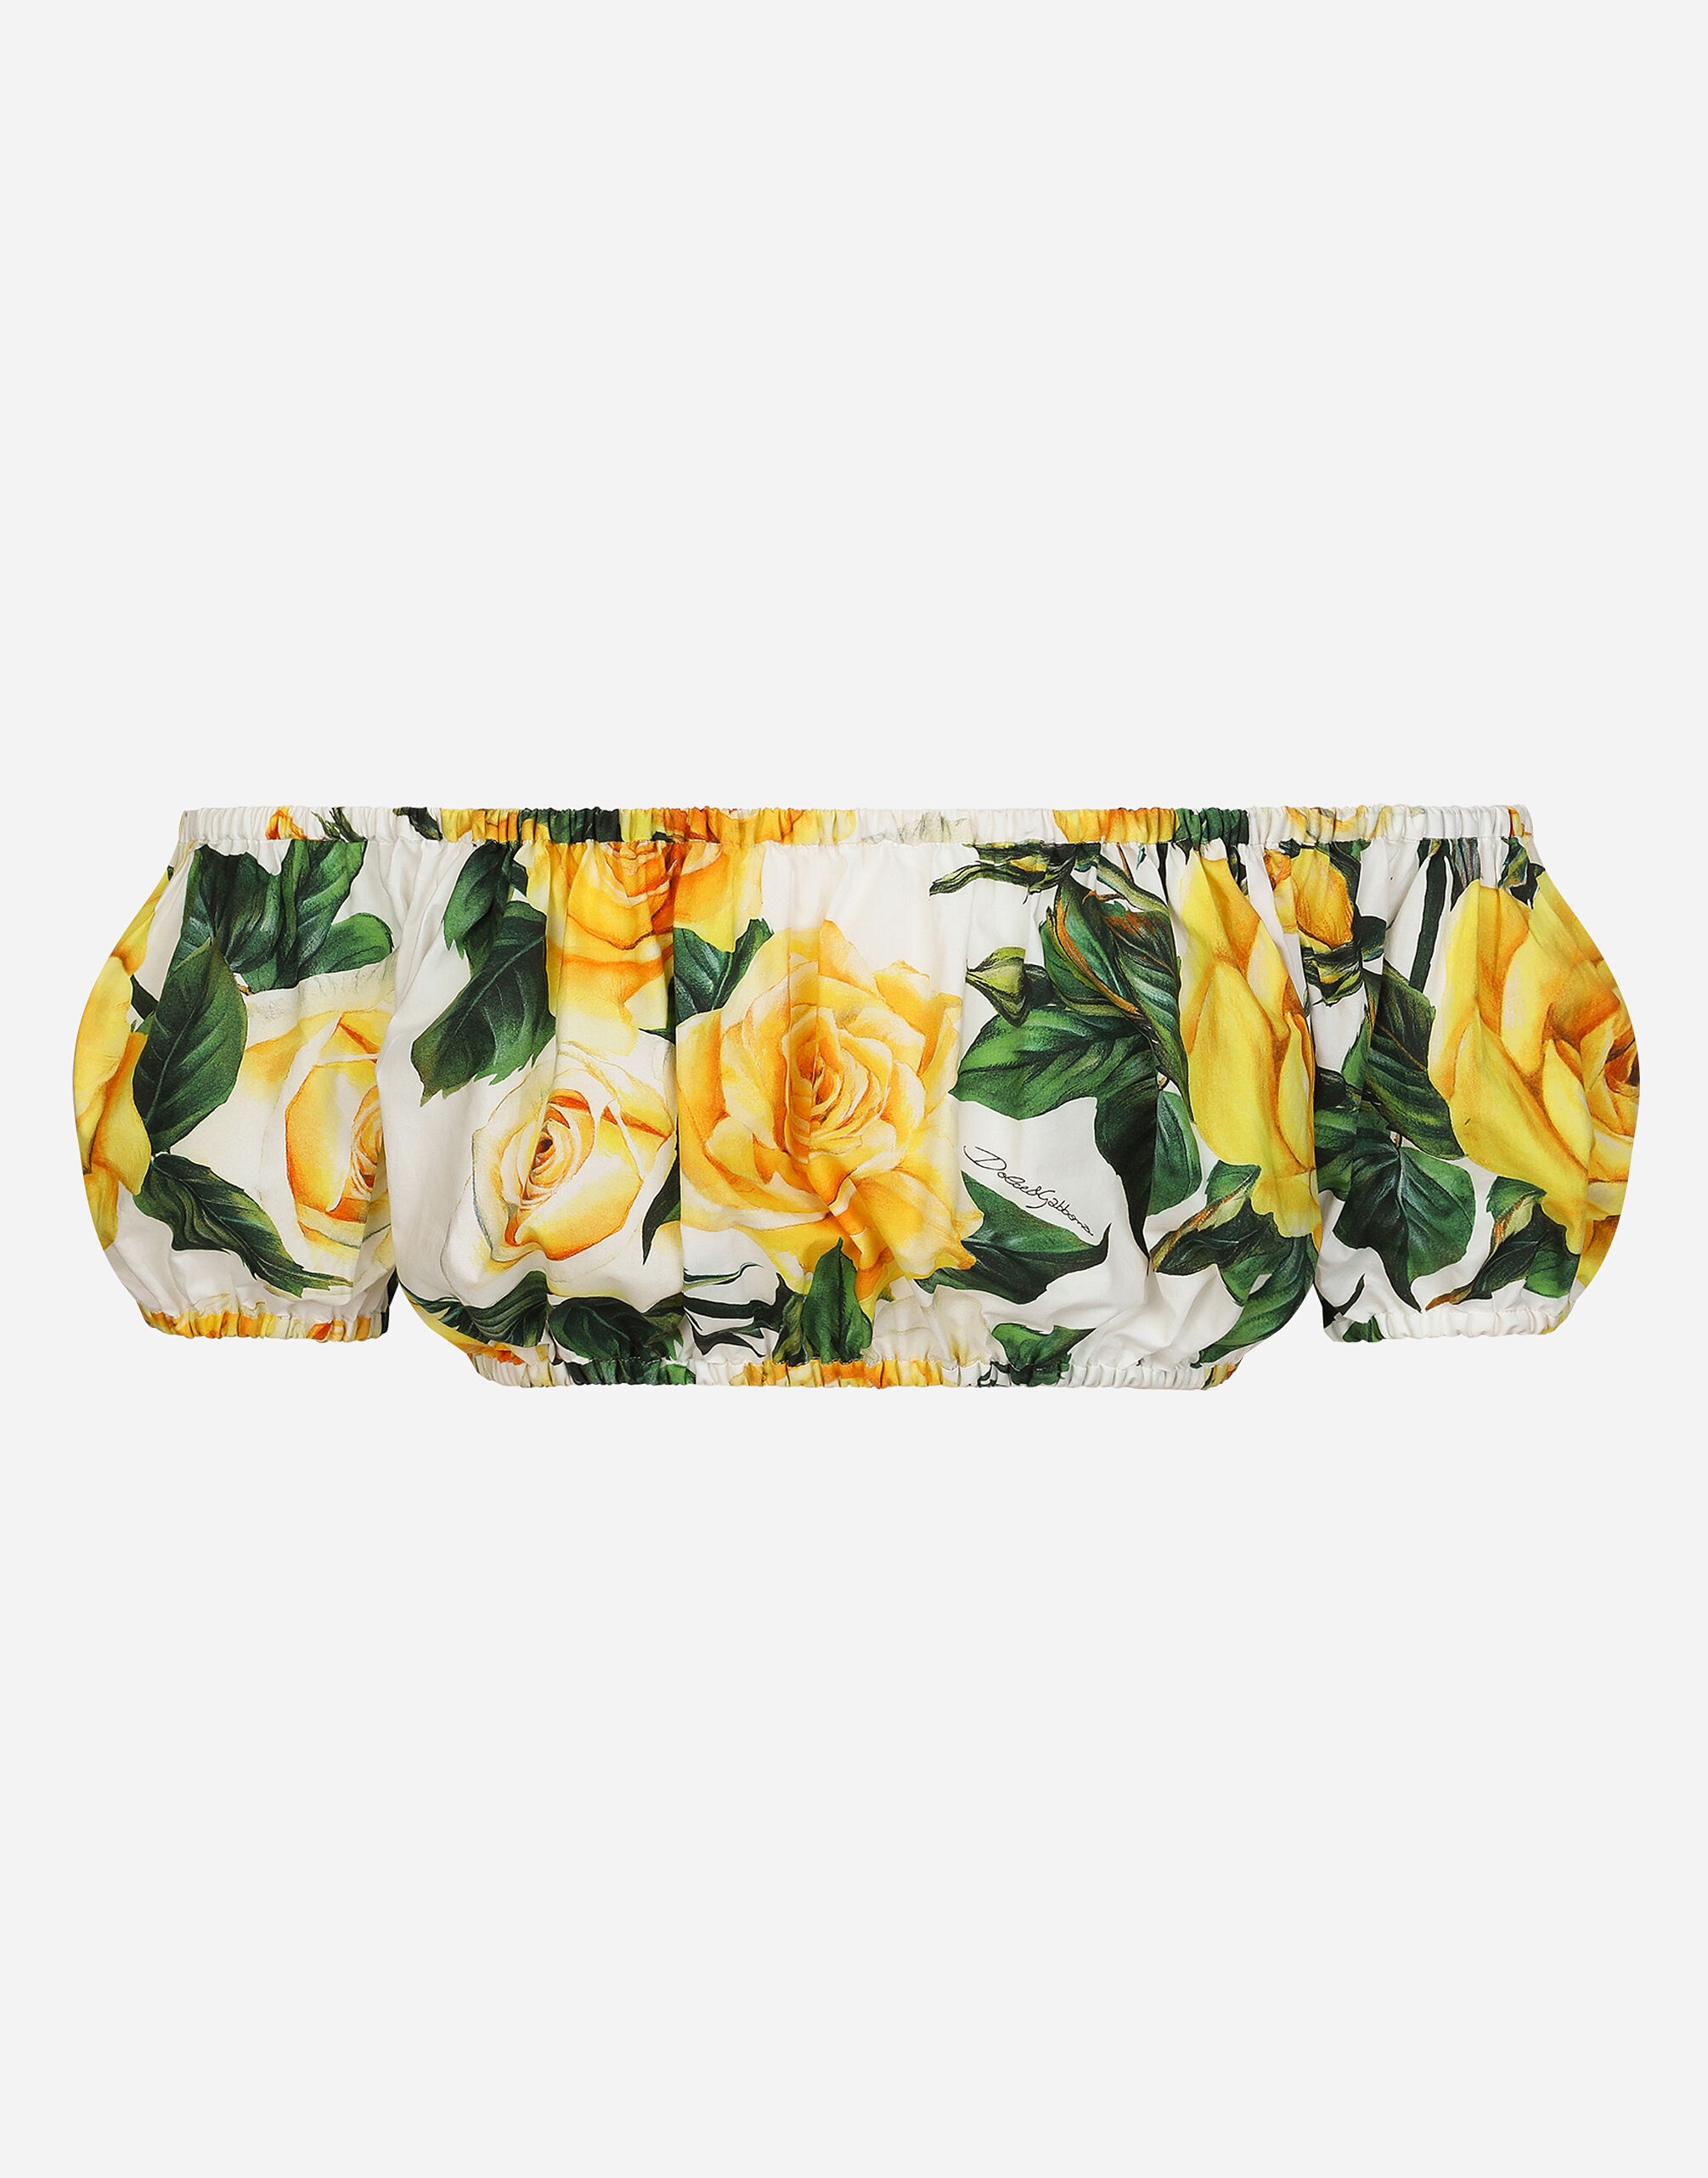 Bardot-neck crop top in yellow rose-print cotton - 2